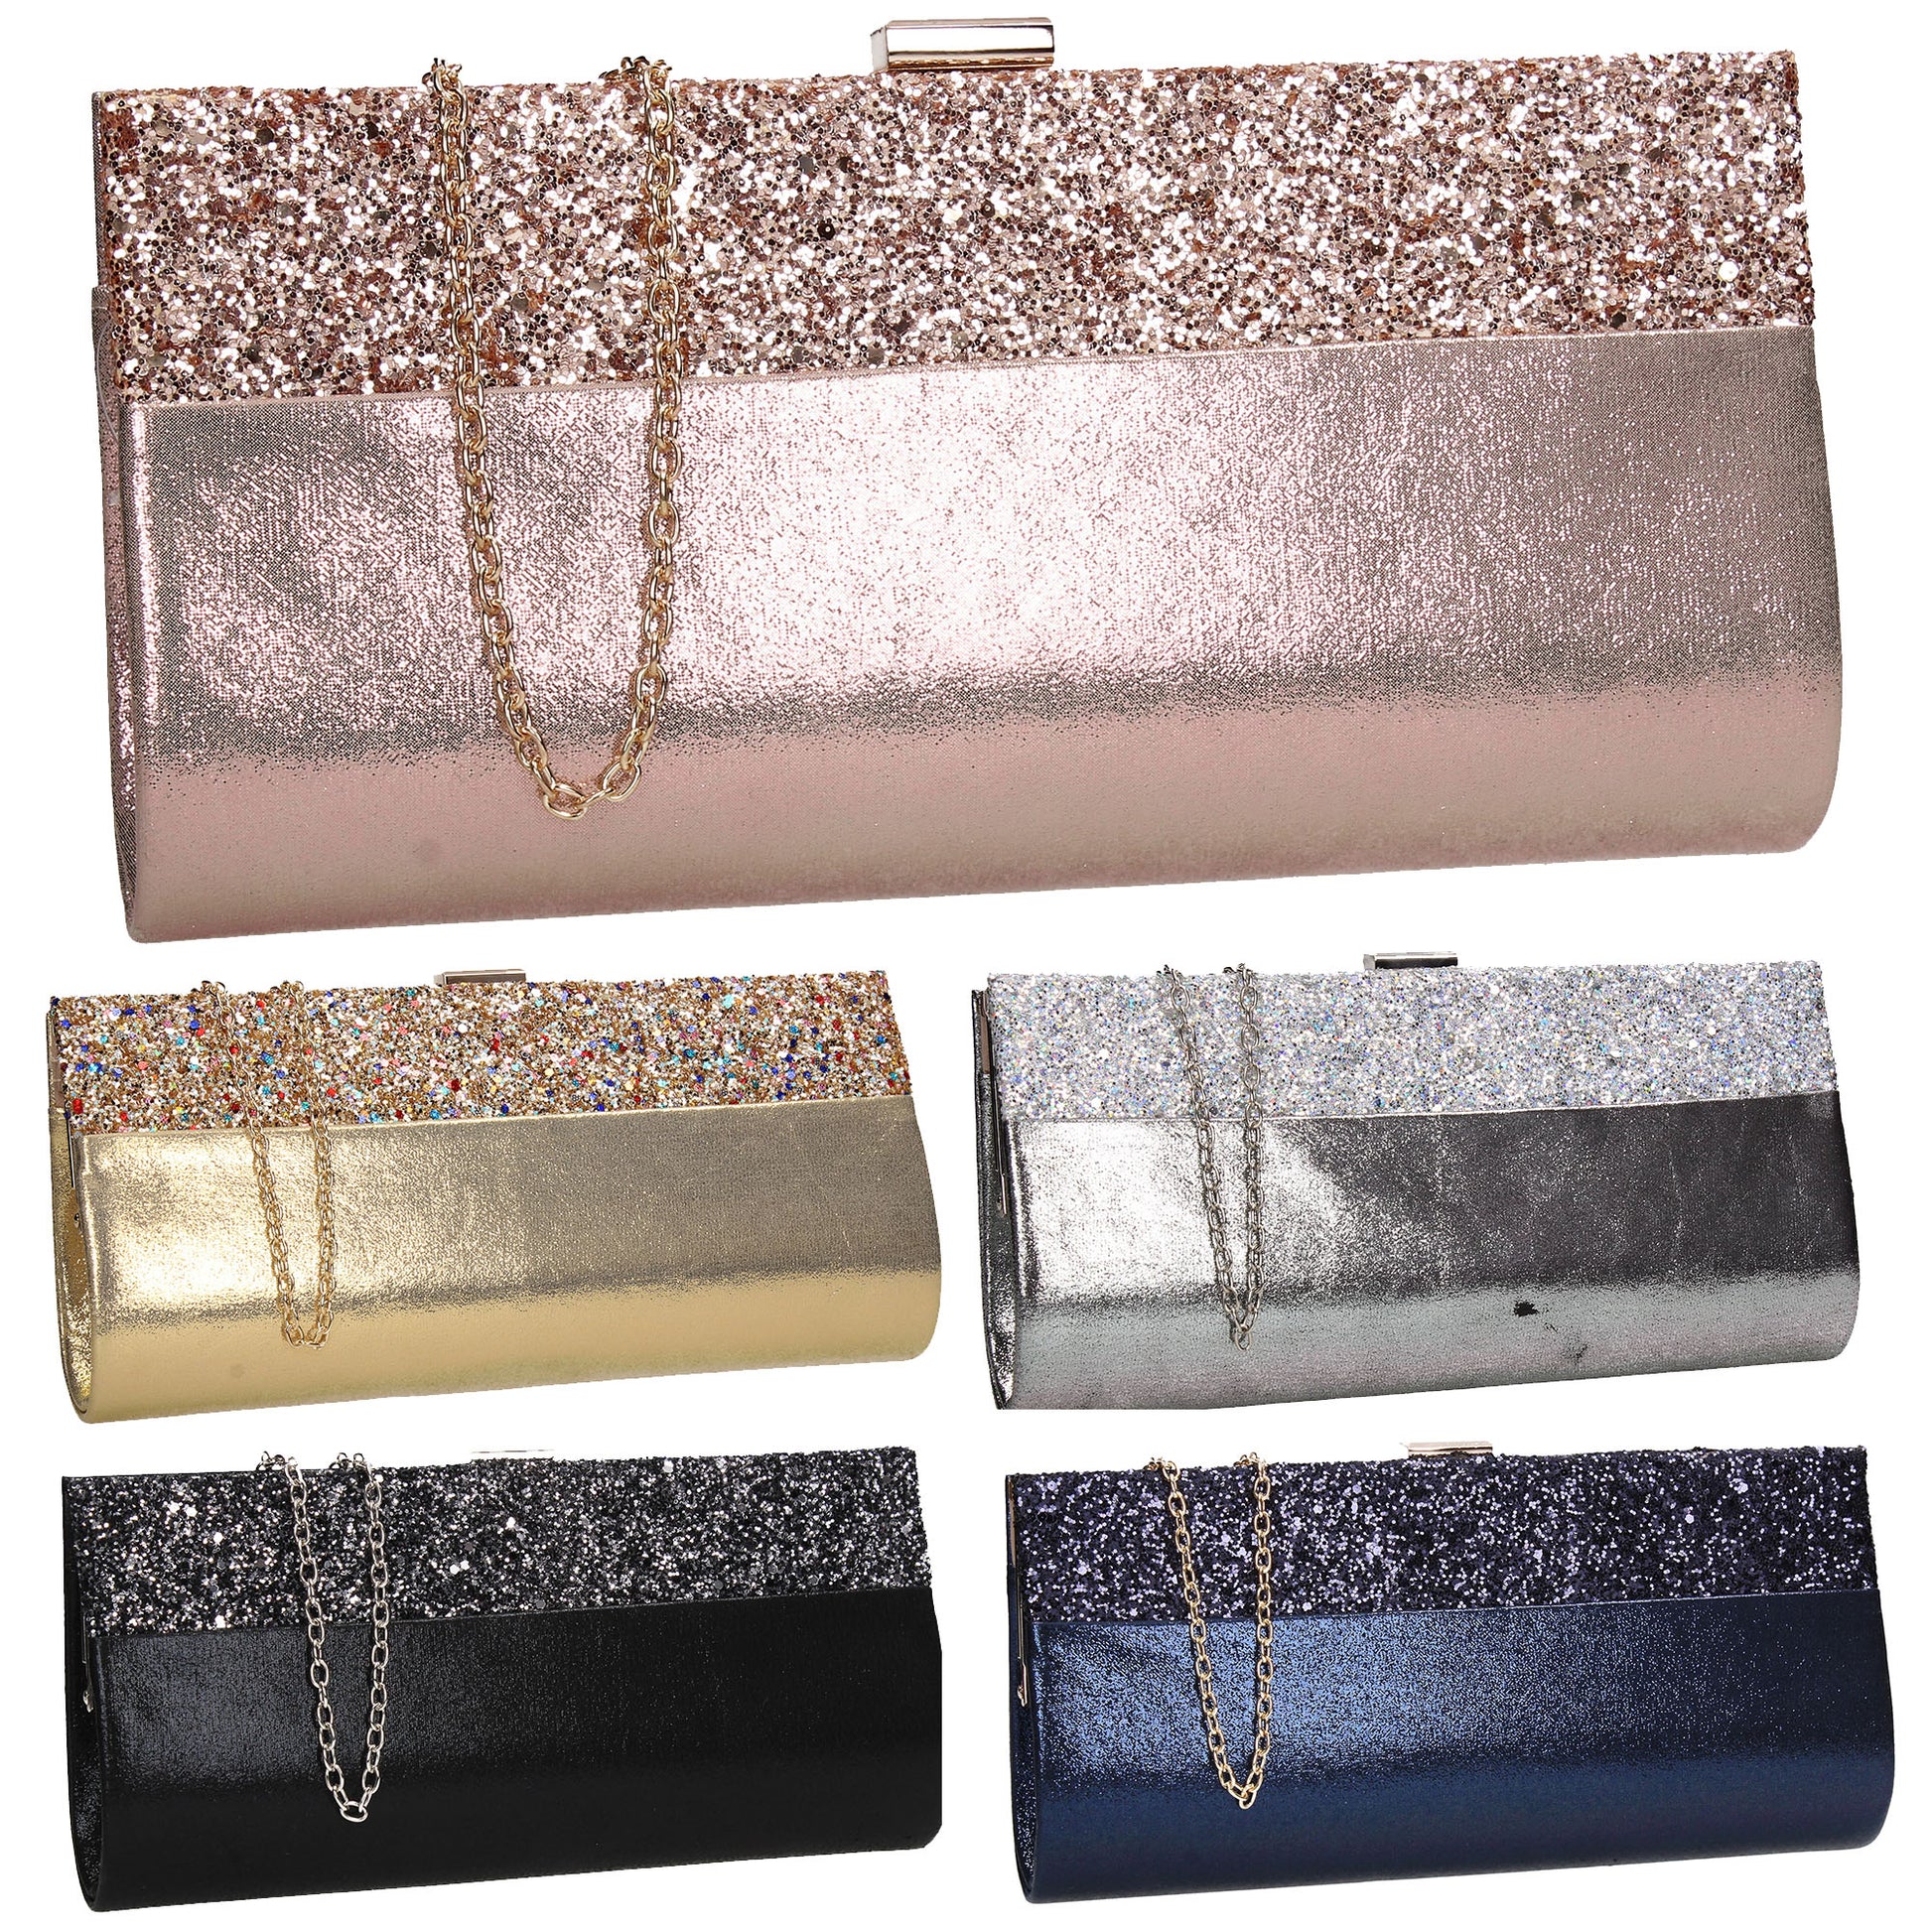 SWANKYSWANS Kathy Glitter Clutch Bag Gold Cute Cheap Clutch Bag For Weddings School and Work